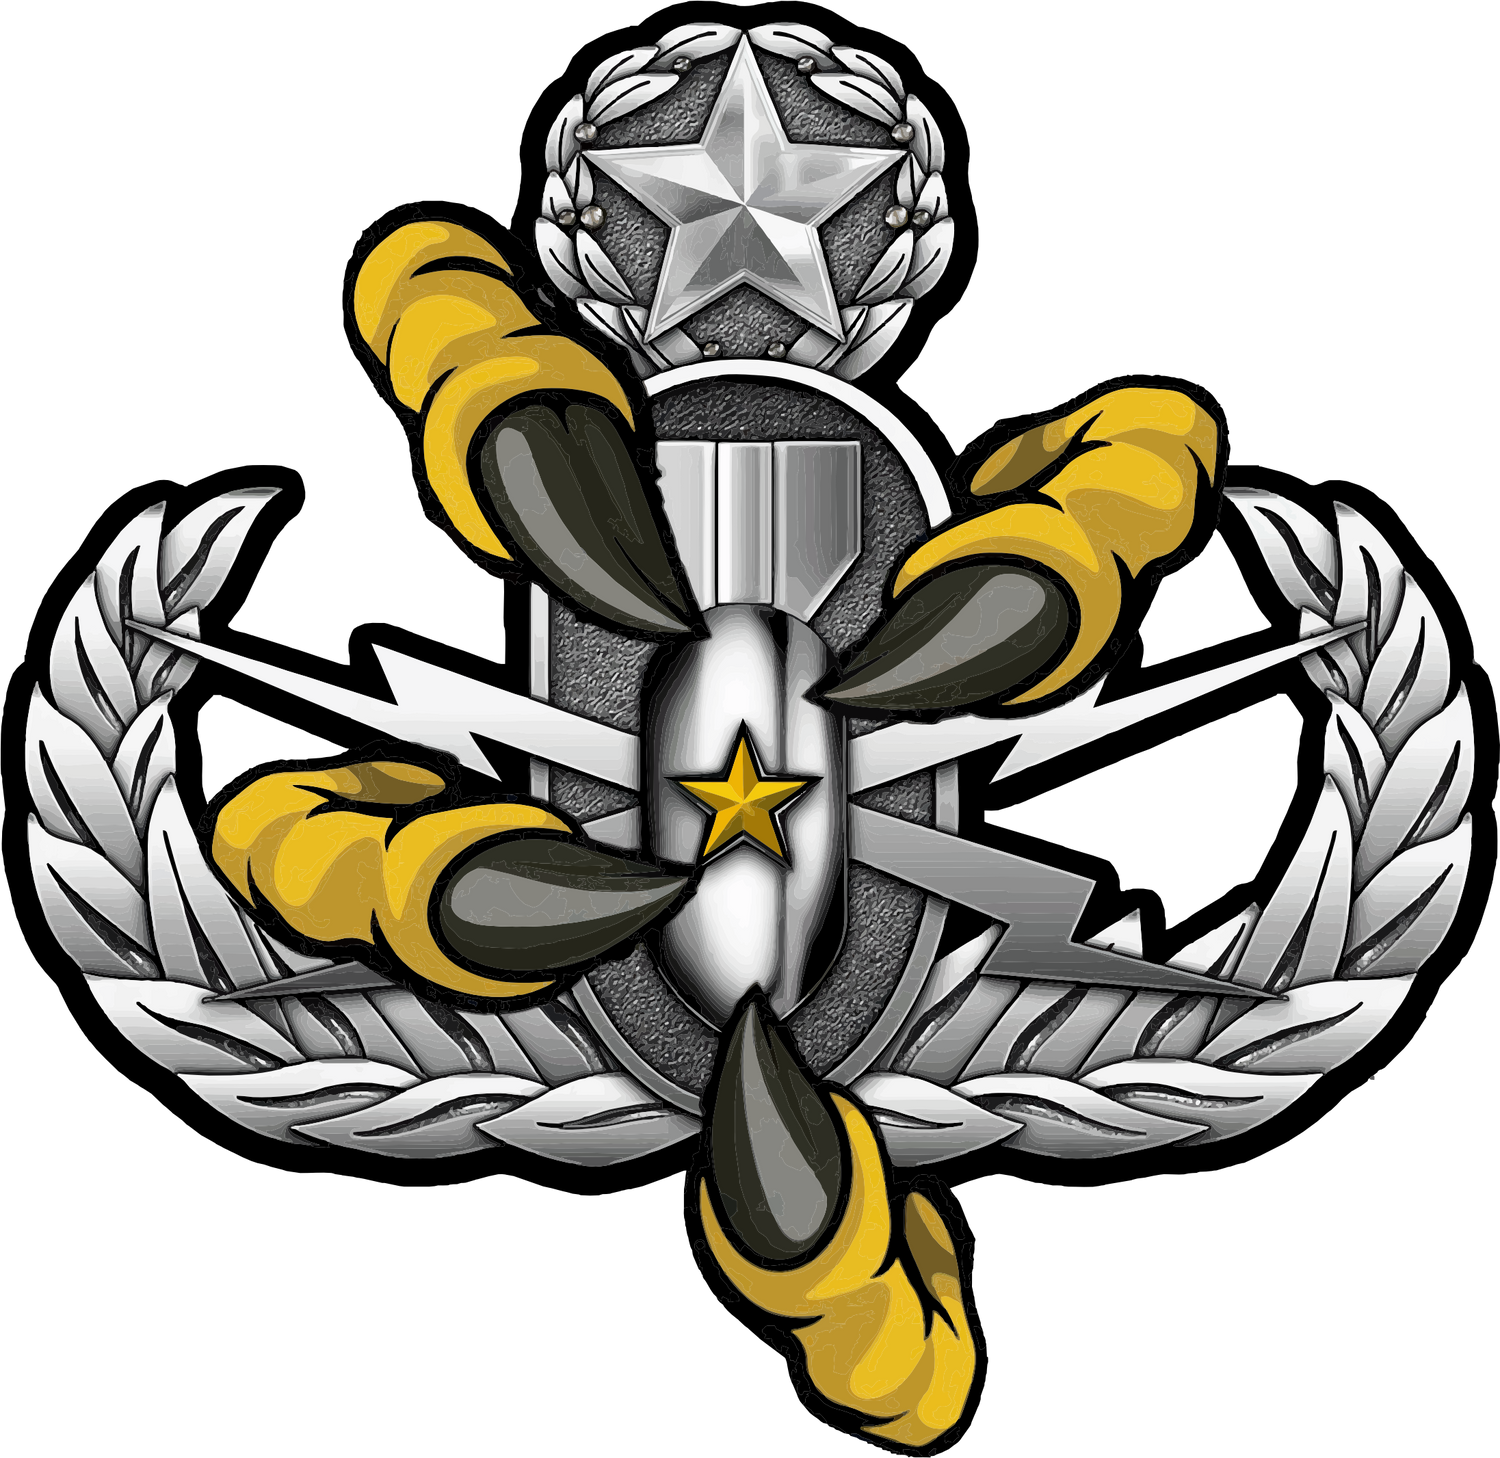 242 Ordnance Battalion (EOD)